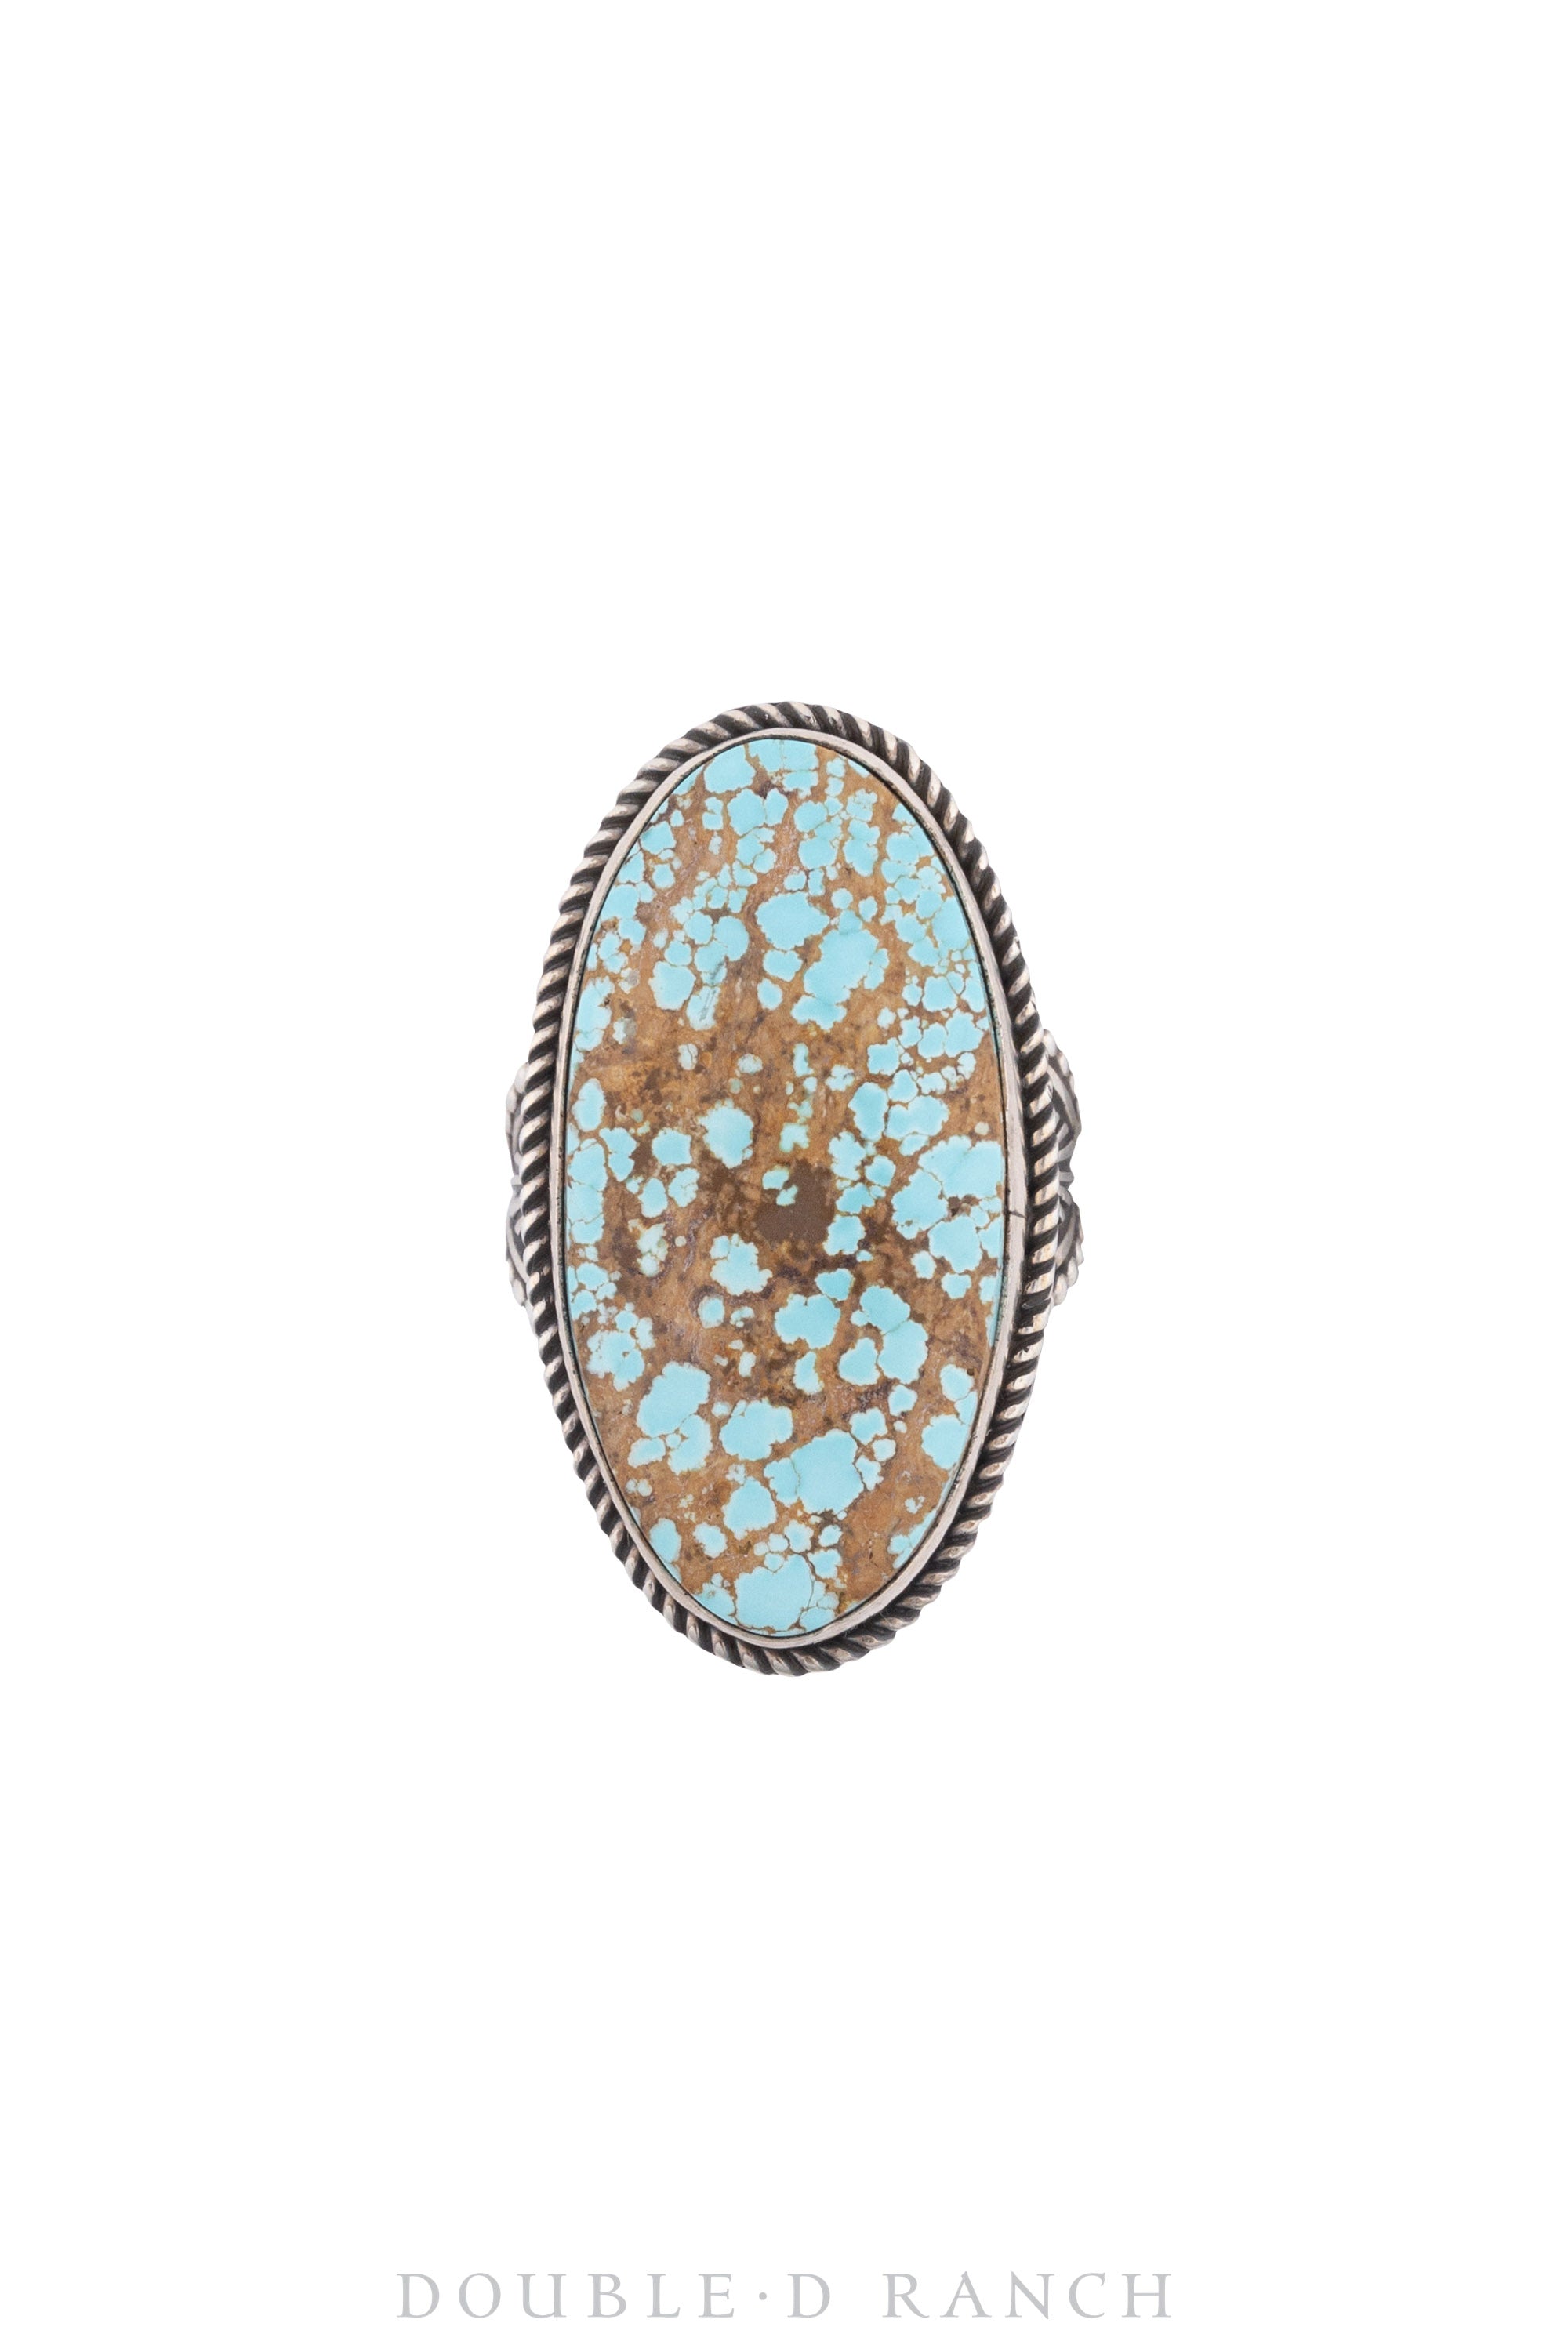 Ring, Natural Stone, Turquoise, Hallmark, Vintage, 1340